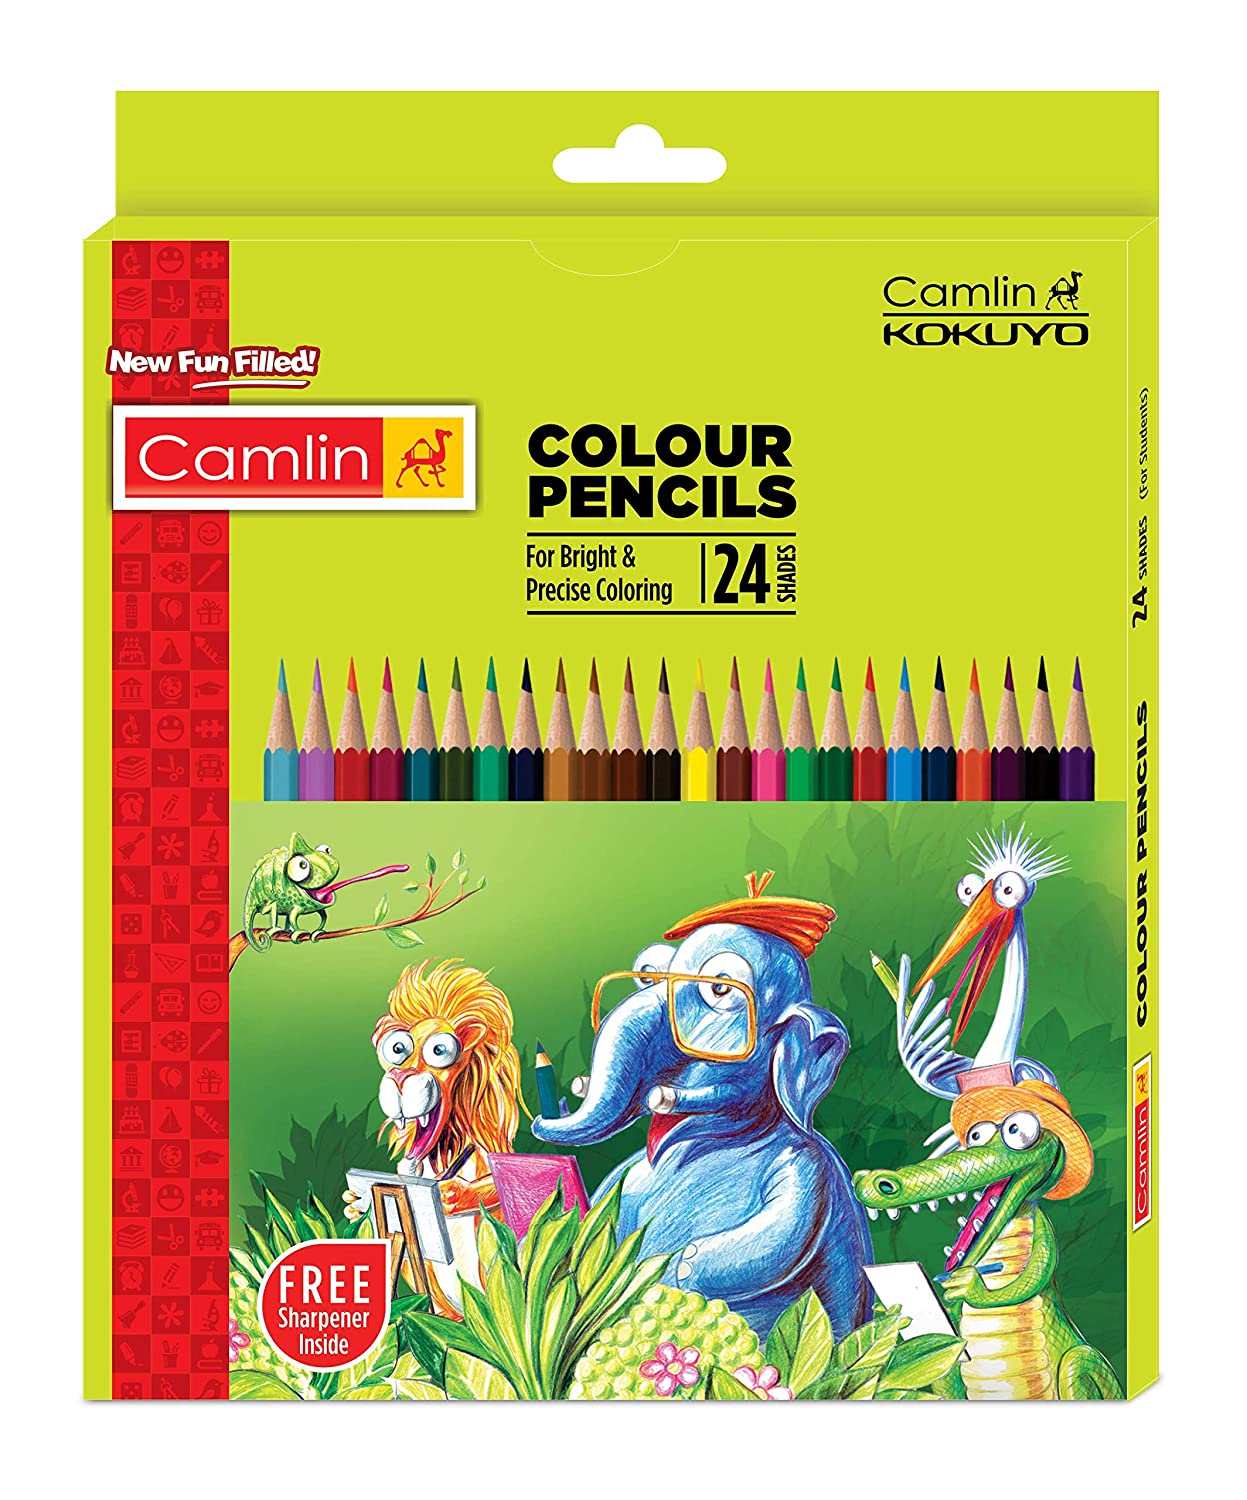 Camlin Kokuyo 24-Shade Full Size Colour Pencil Set (Assorted)